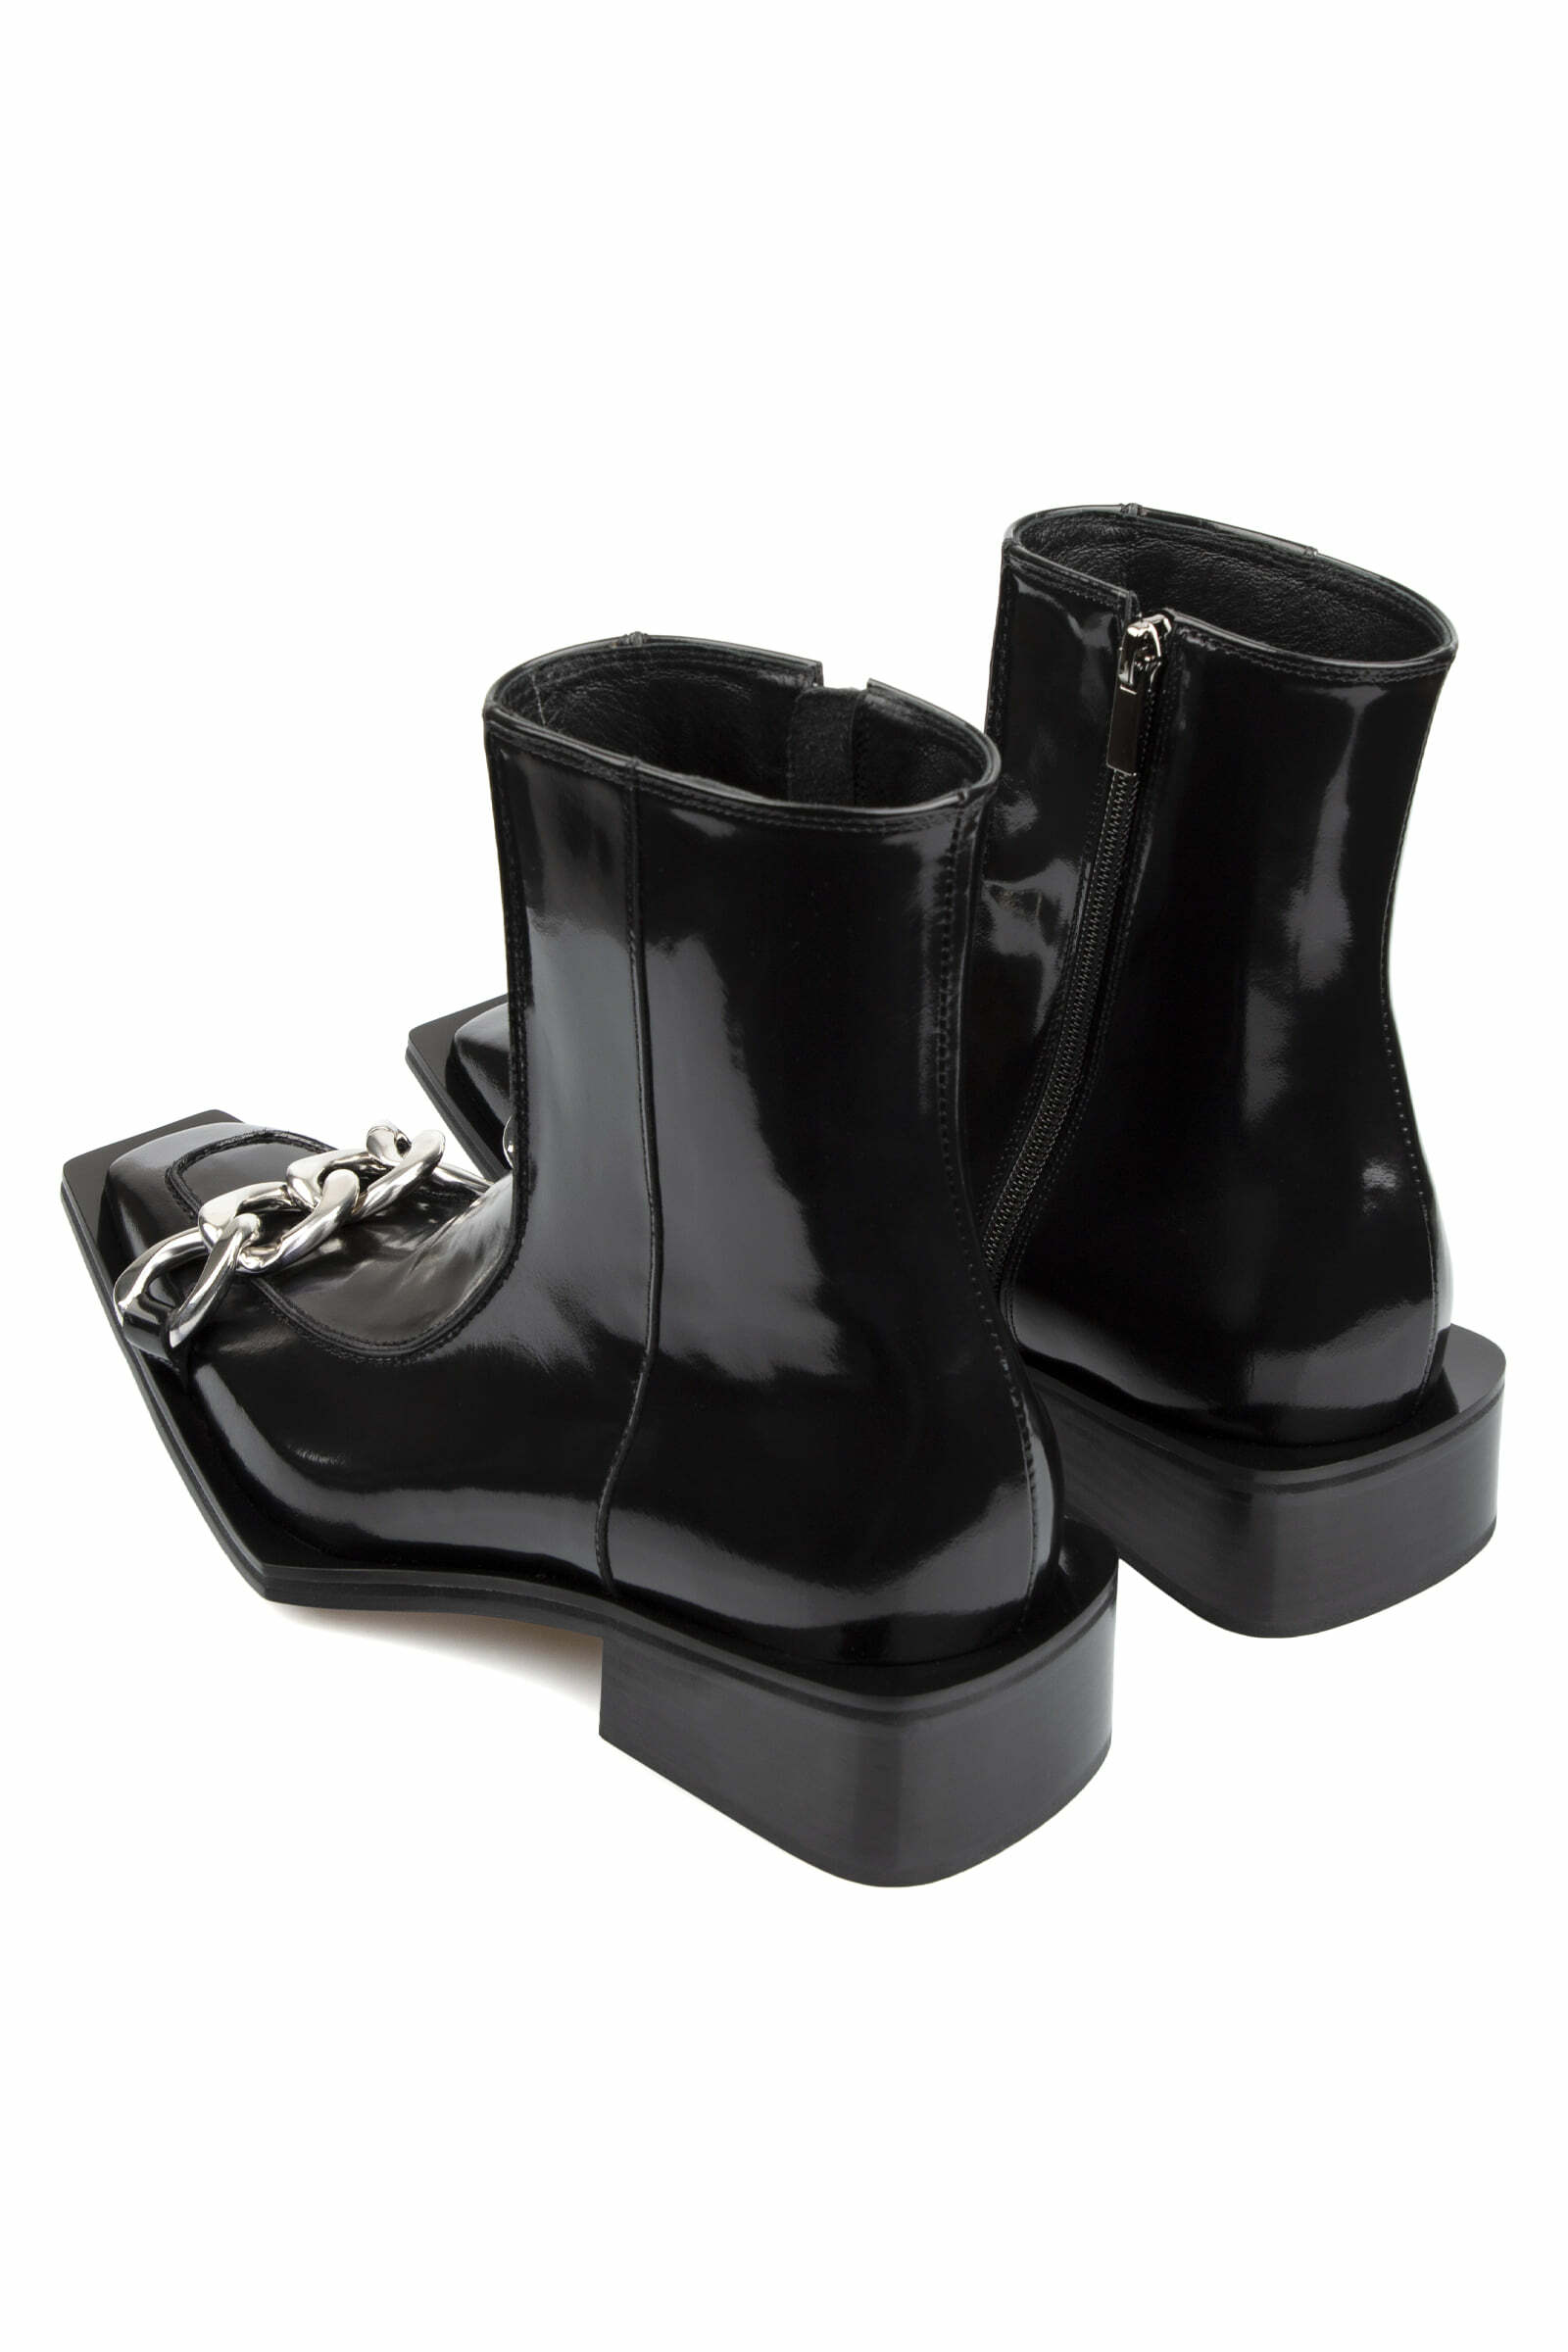 Soulesures heel boots www.krzysztofbialy.com